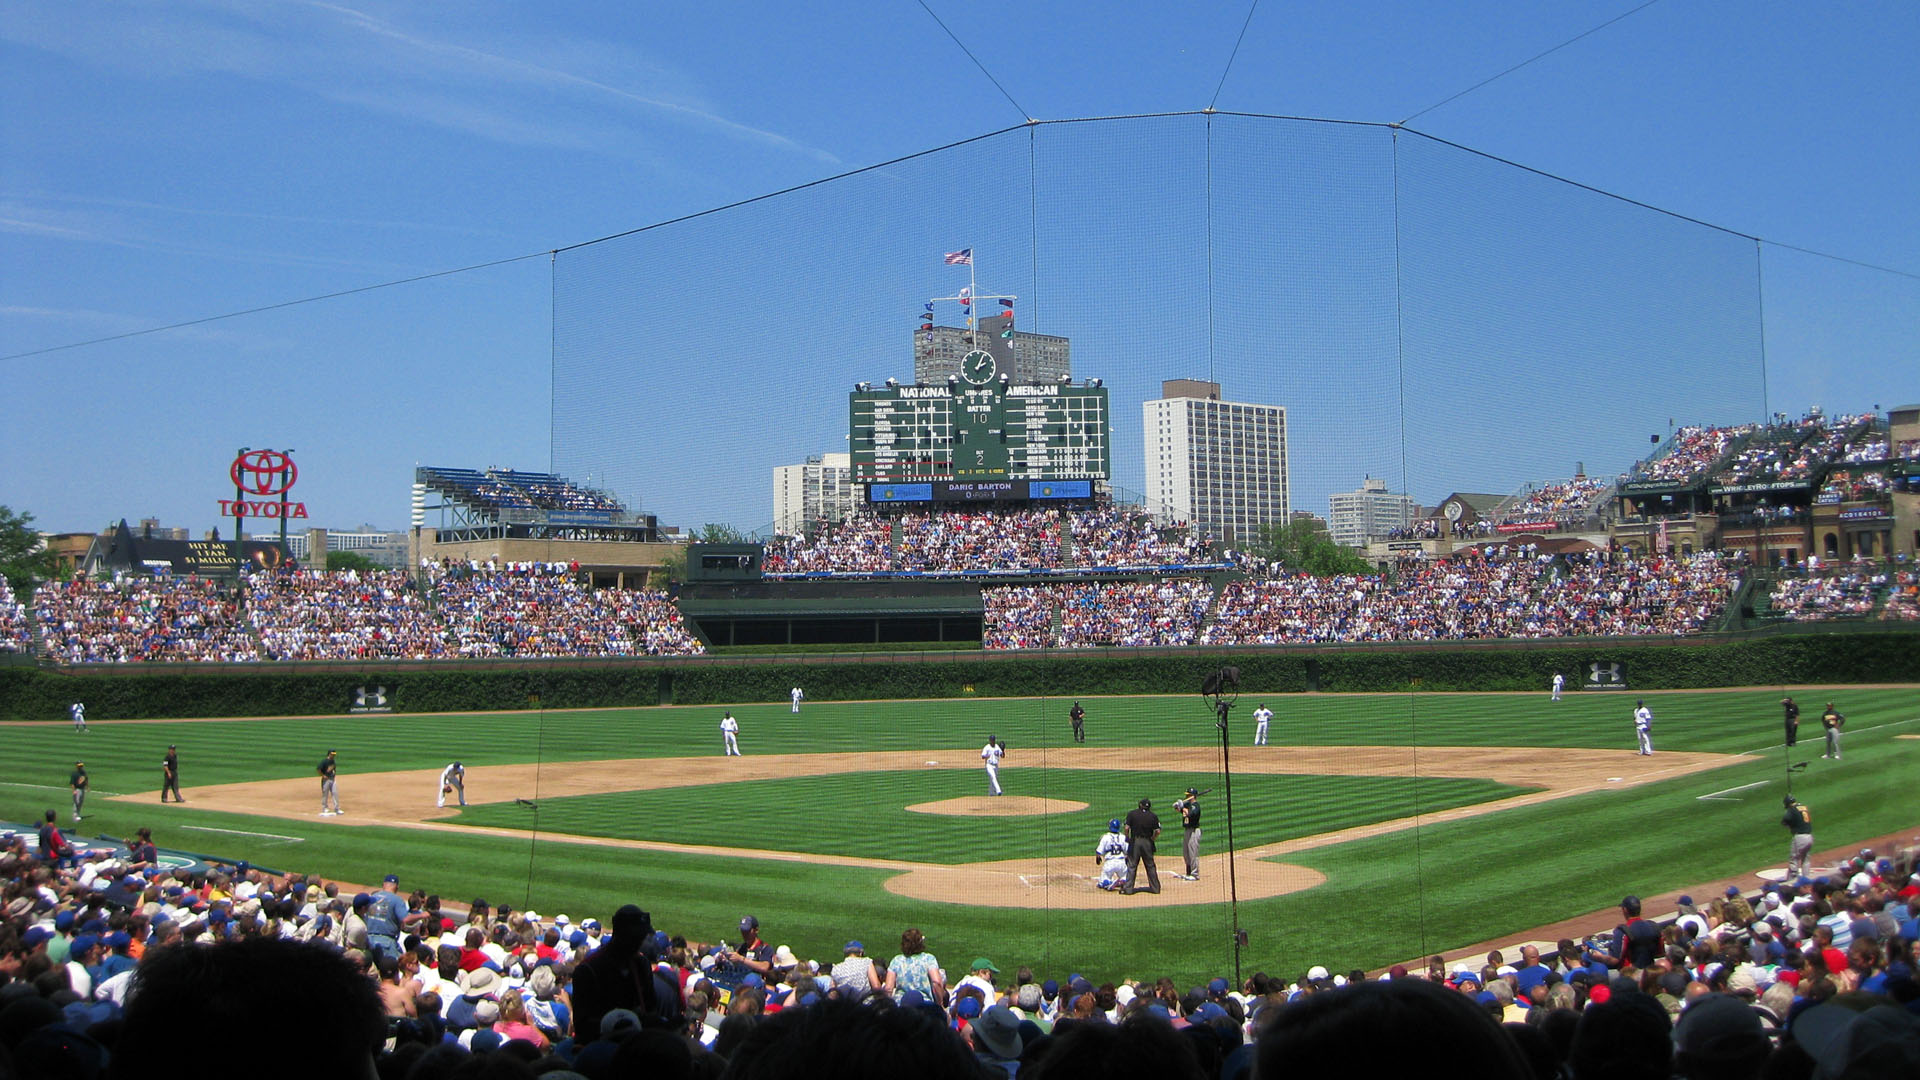 CHICAGO CUBS mlb baseball 22 wallpaper 1920x1080 232528 1920x1080